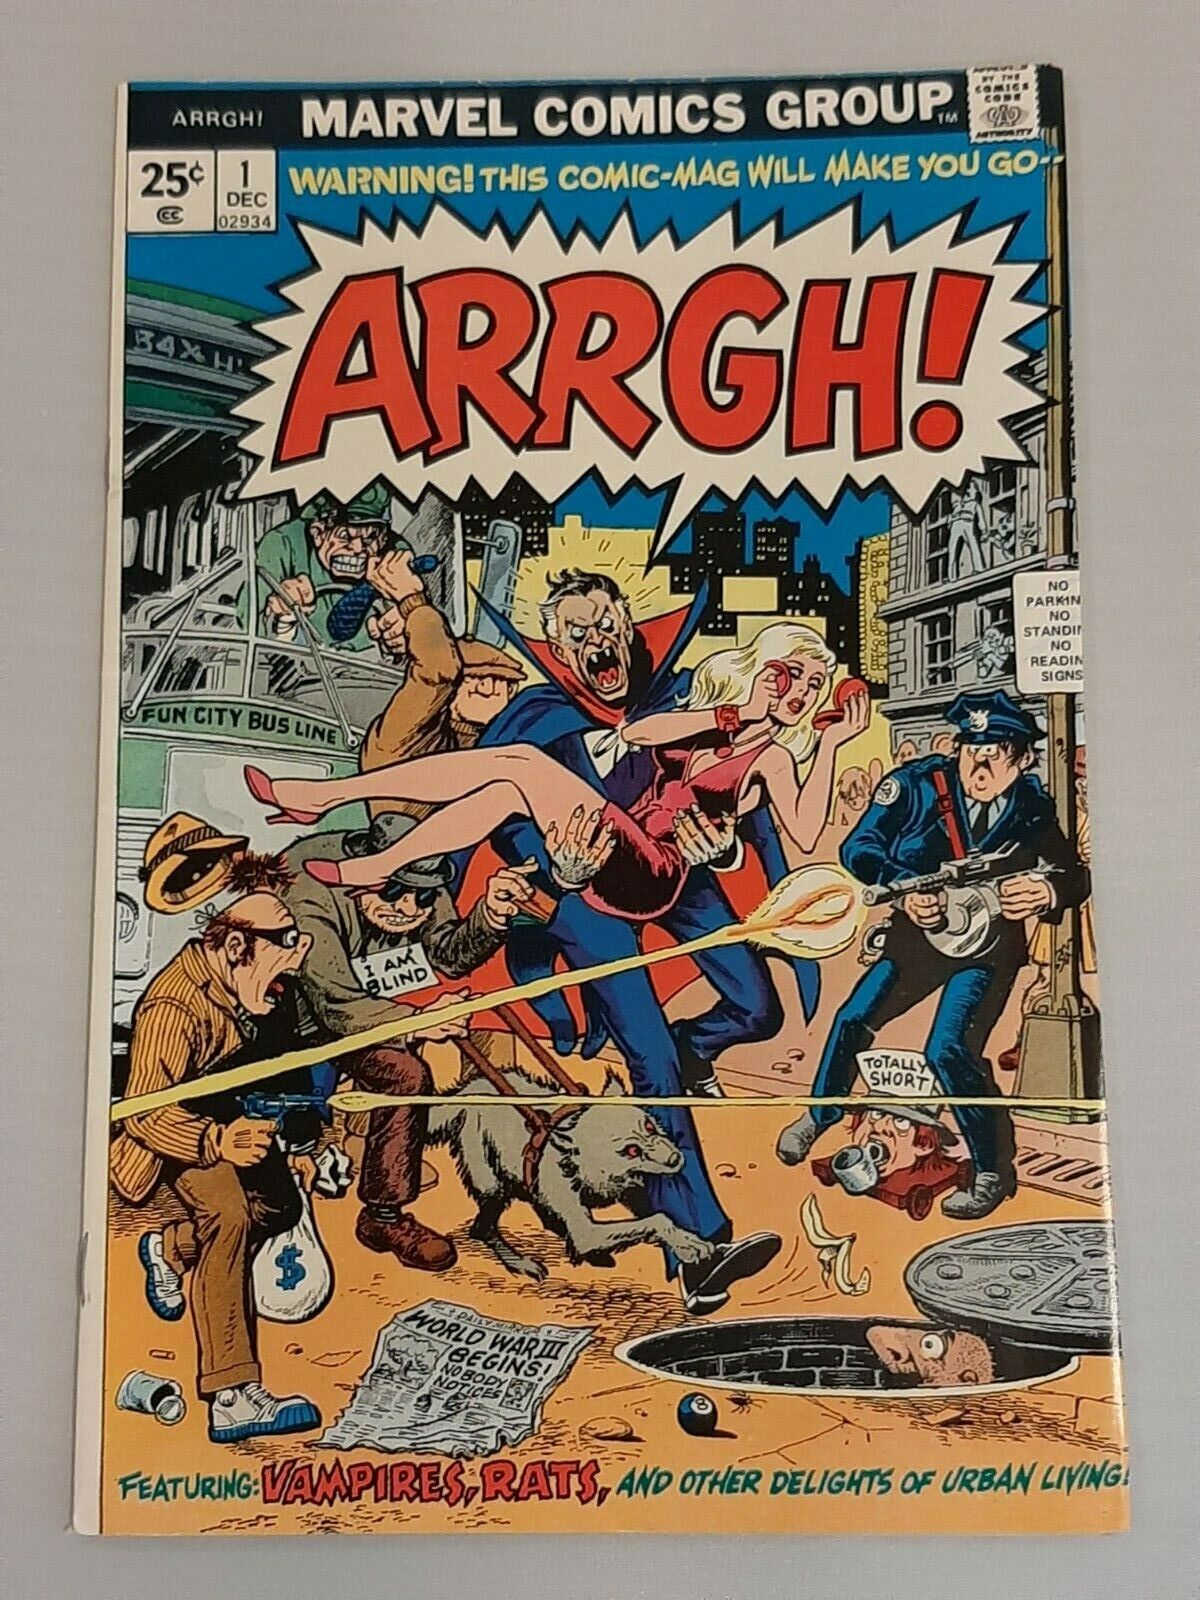 ARRGH 1974 #1 Marvel Comics Bronze Age Satire Humor 1974 Very Good Condition